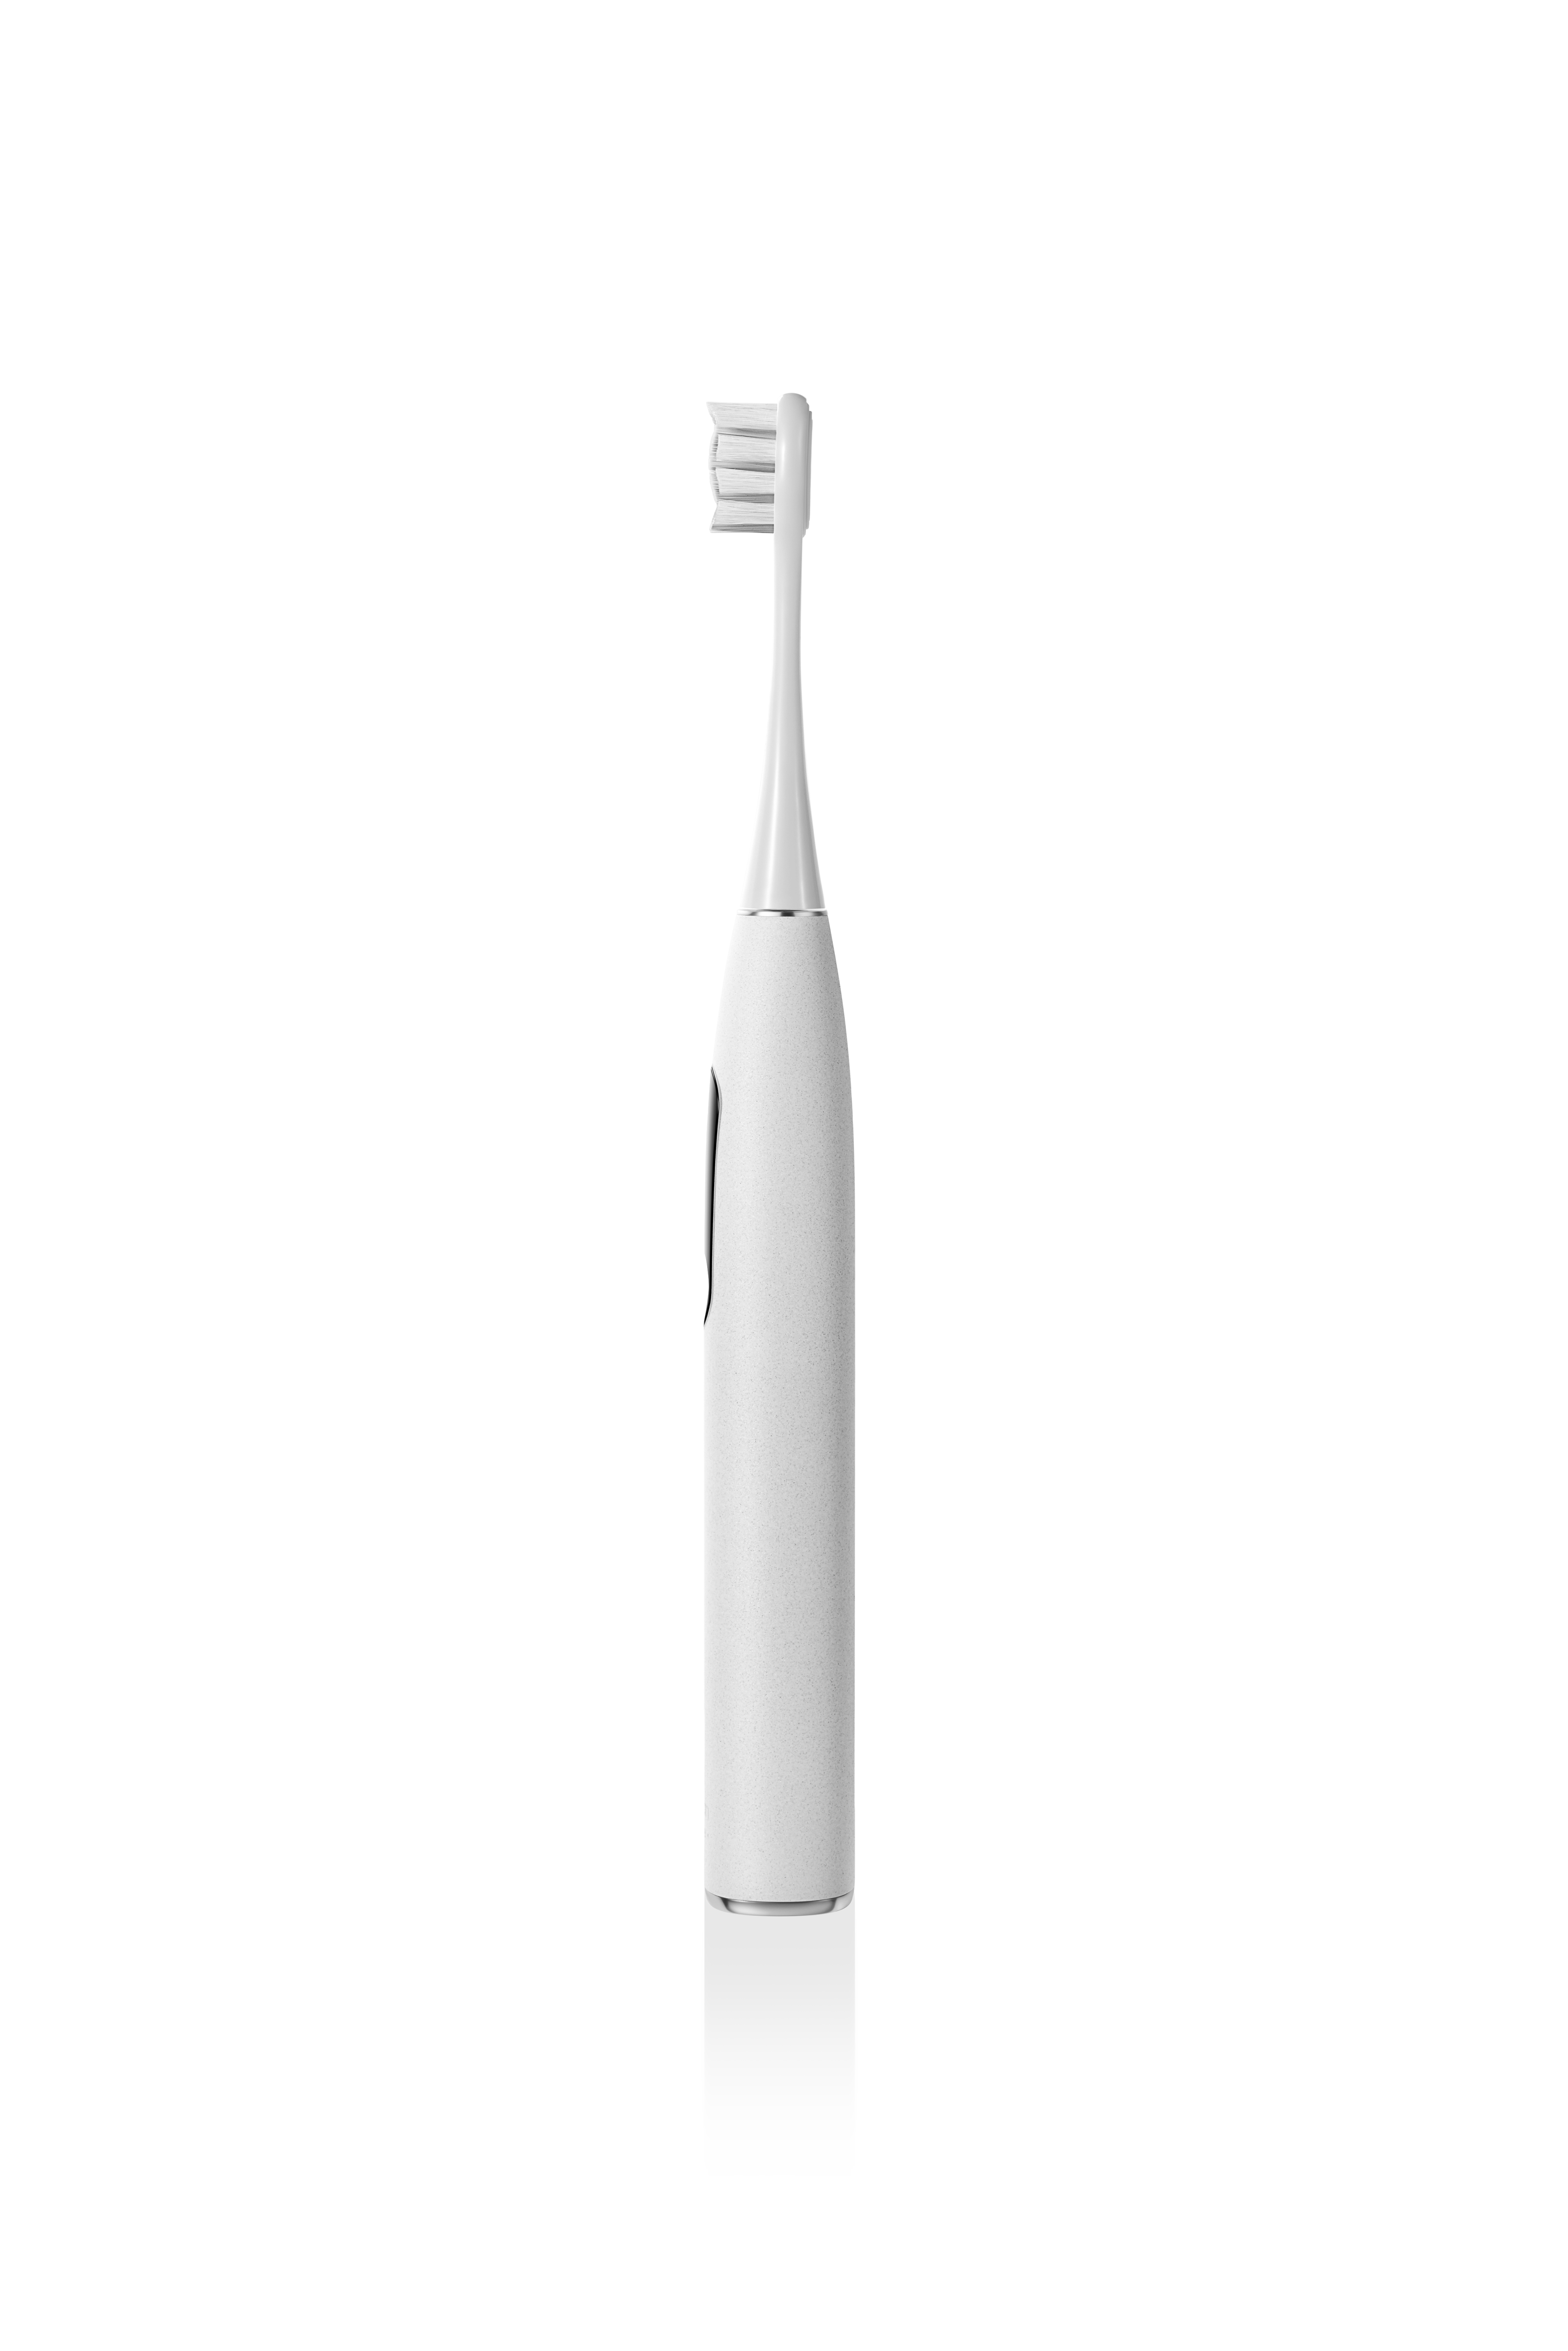 Oclean X Pro Elite Smart Sonic Electric Toothbrush EAA00195